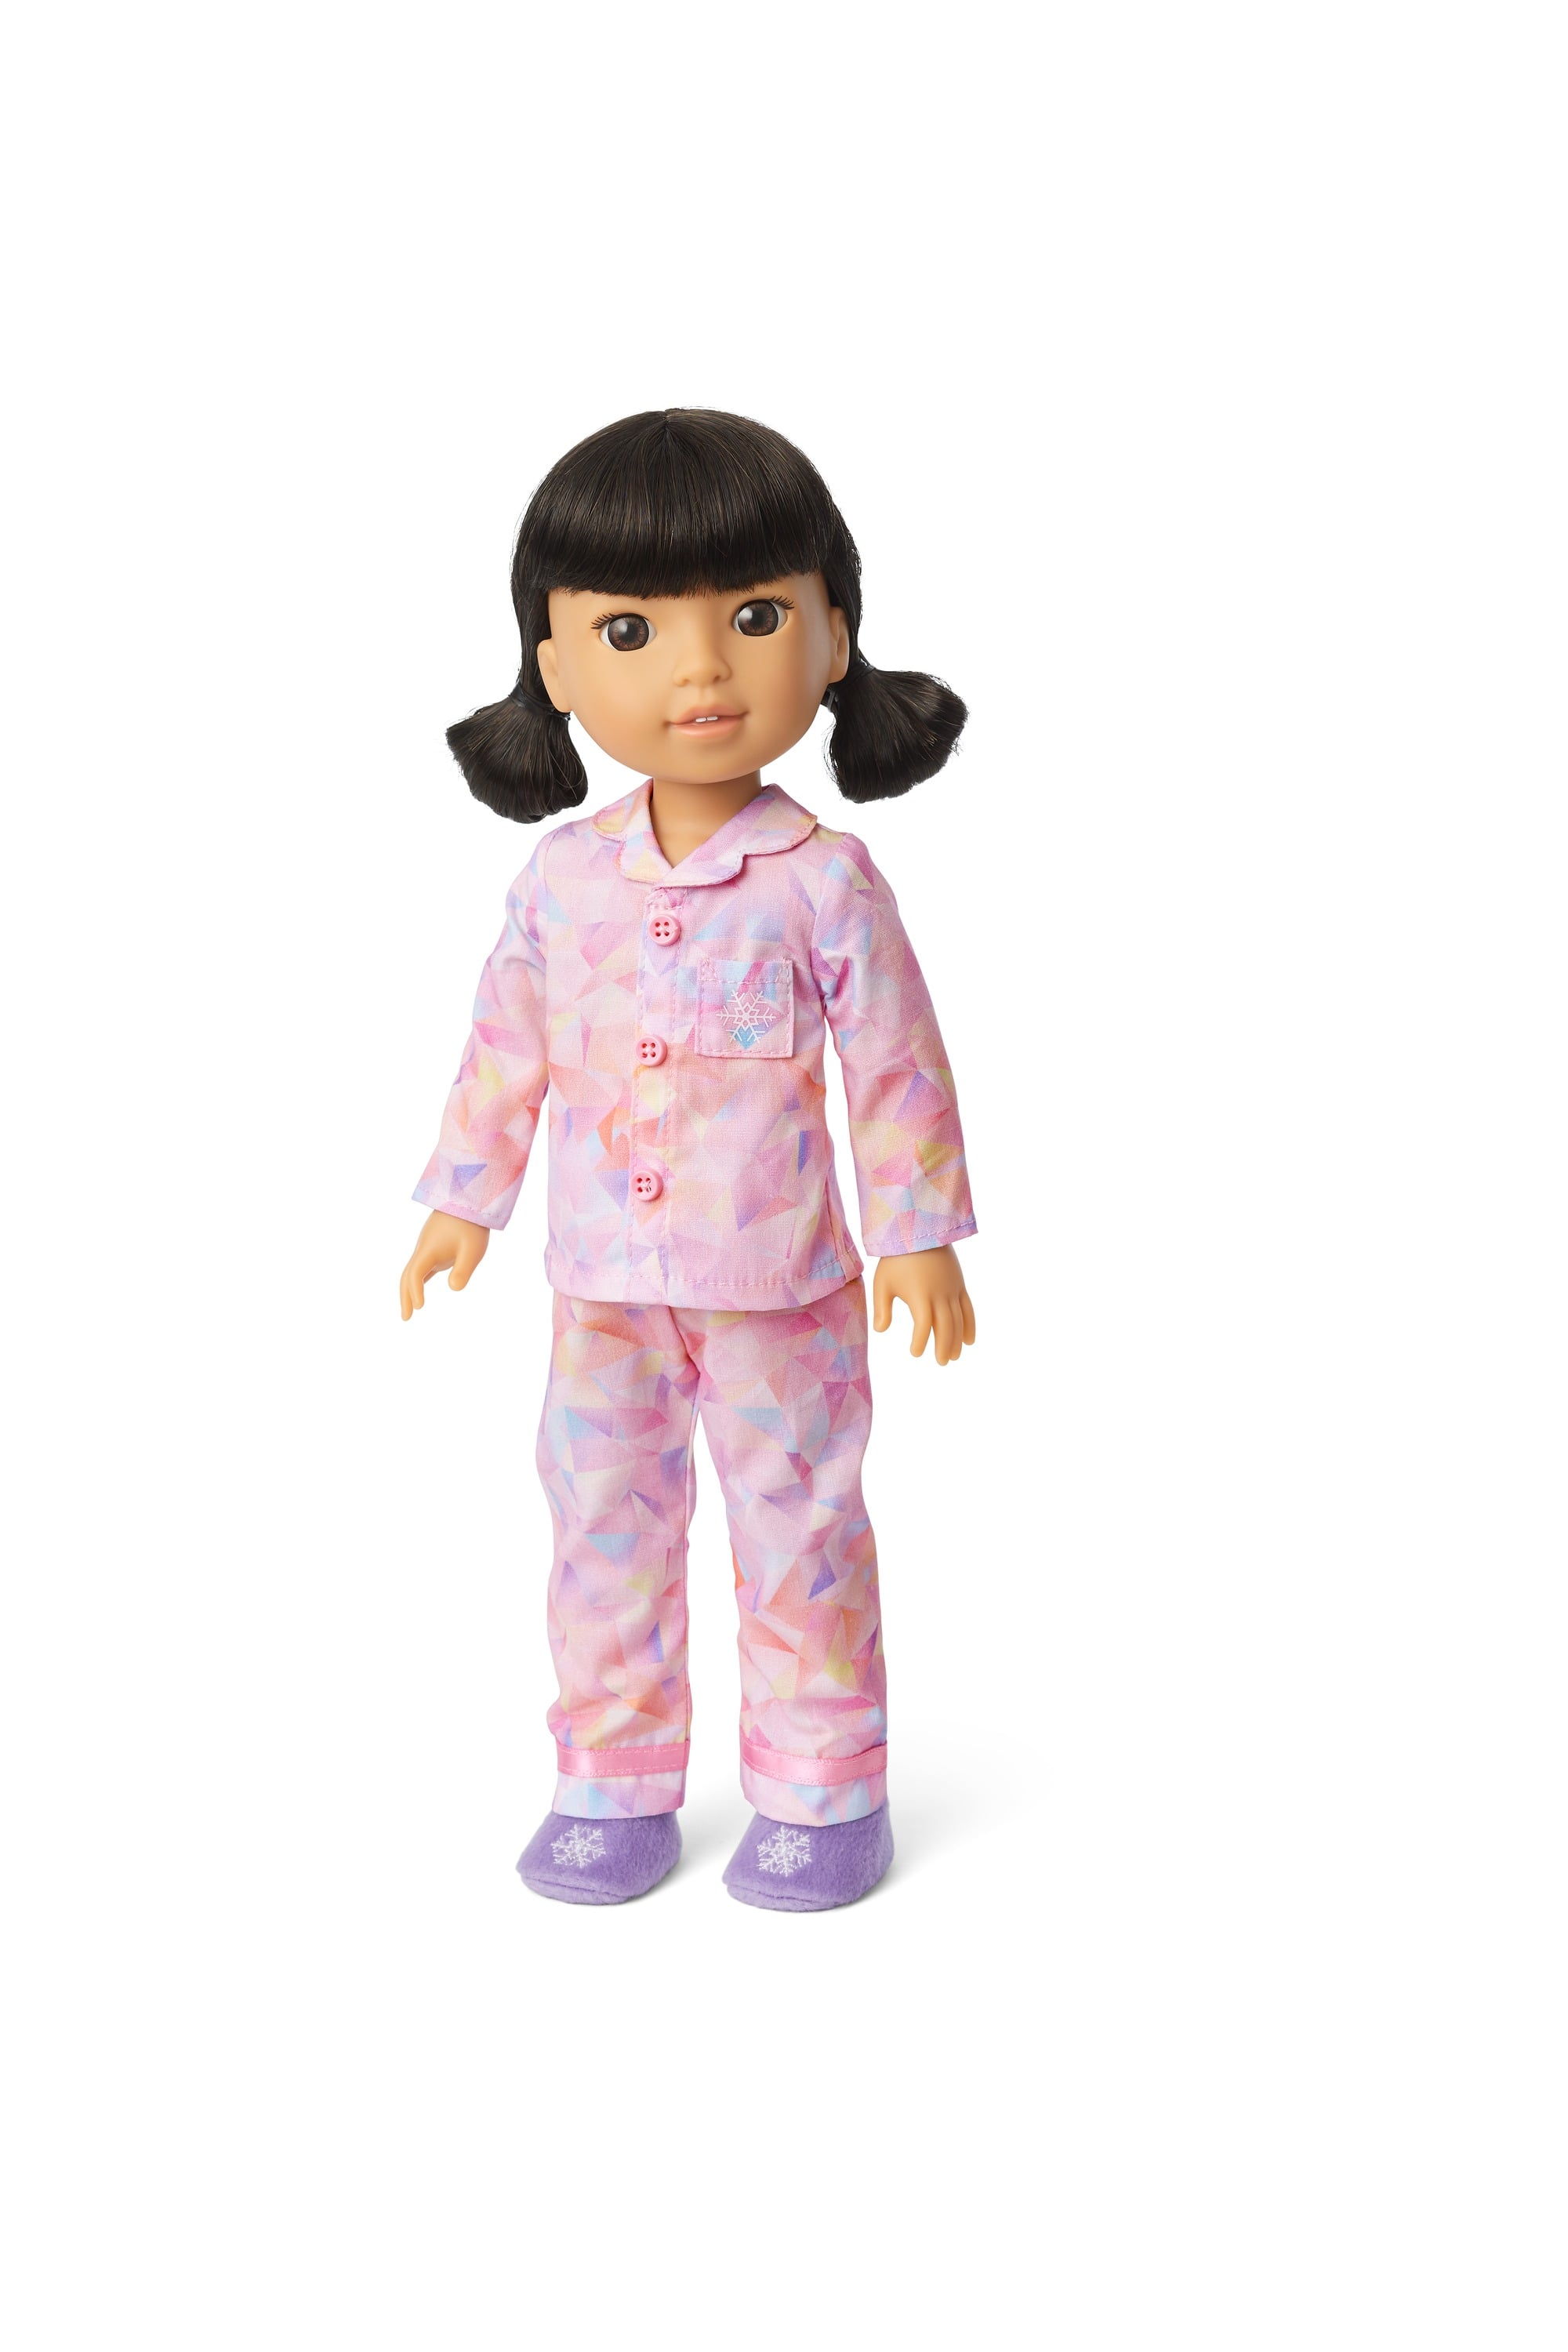 American Girl Doll of the Year 2022, Corinne Tan